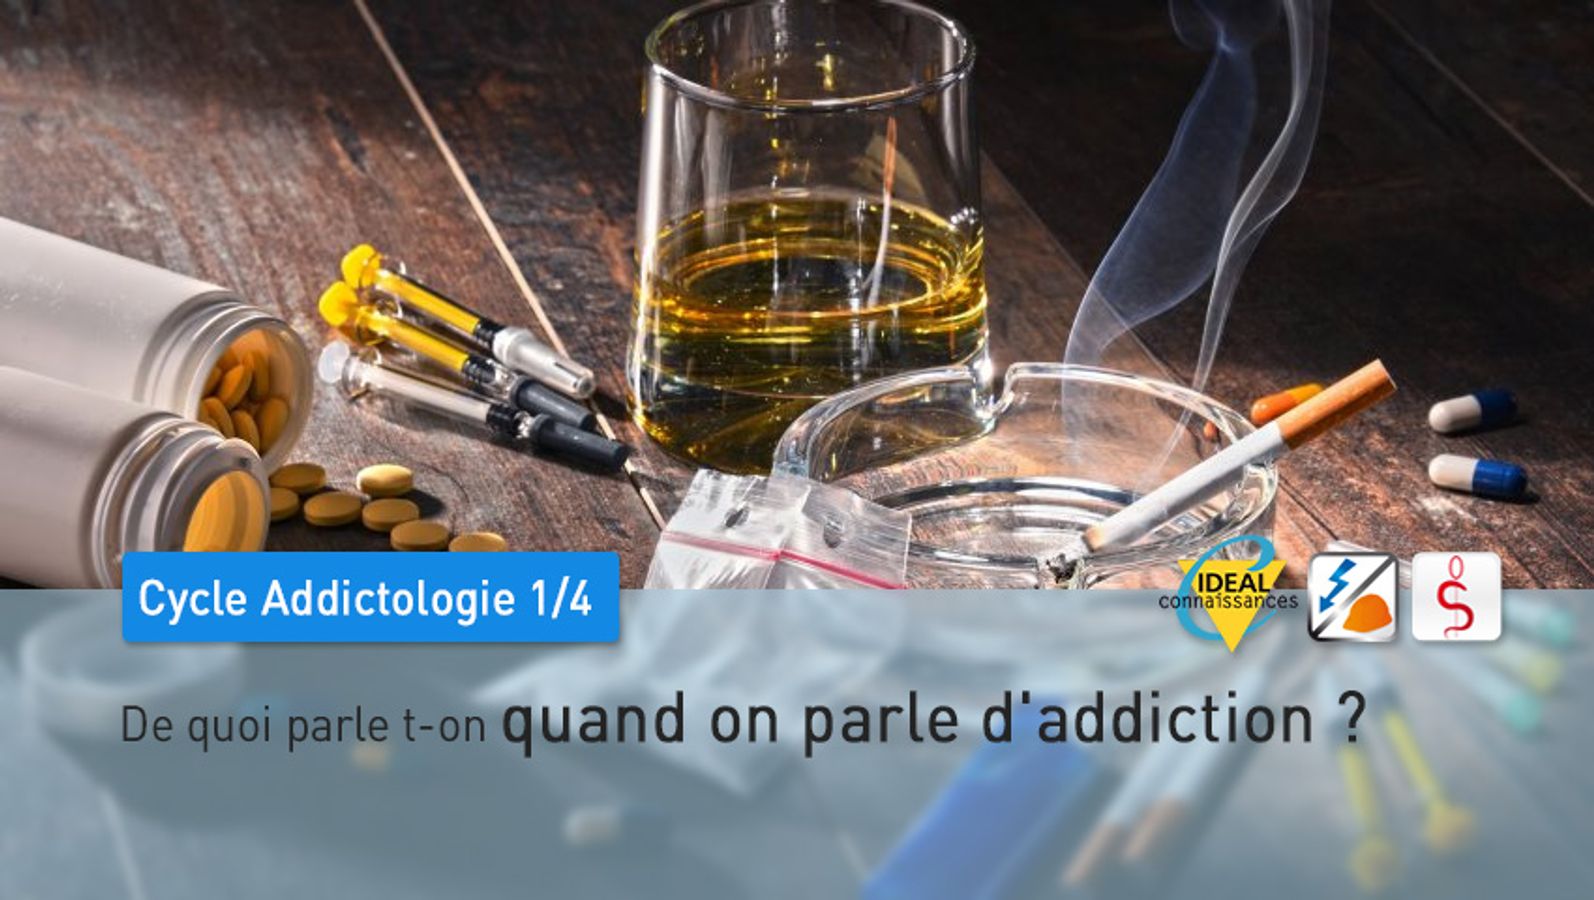 Cycle Addictologie 1/4 - De quoi parle t-on quand on parle d'addiction ?